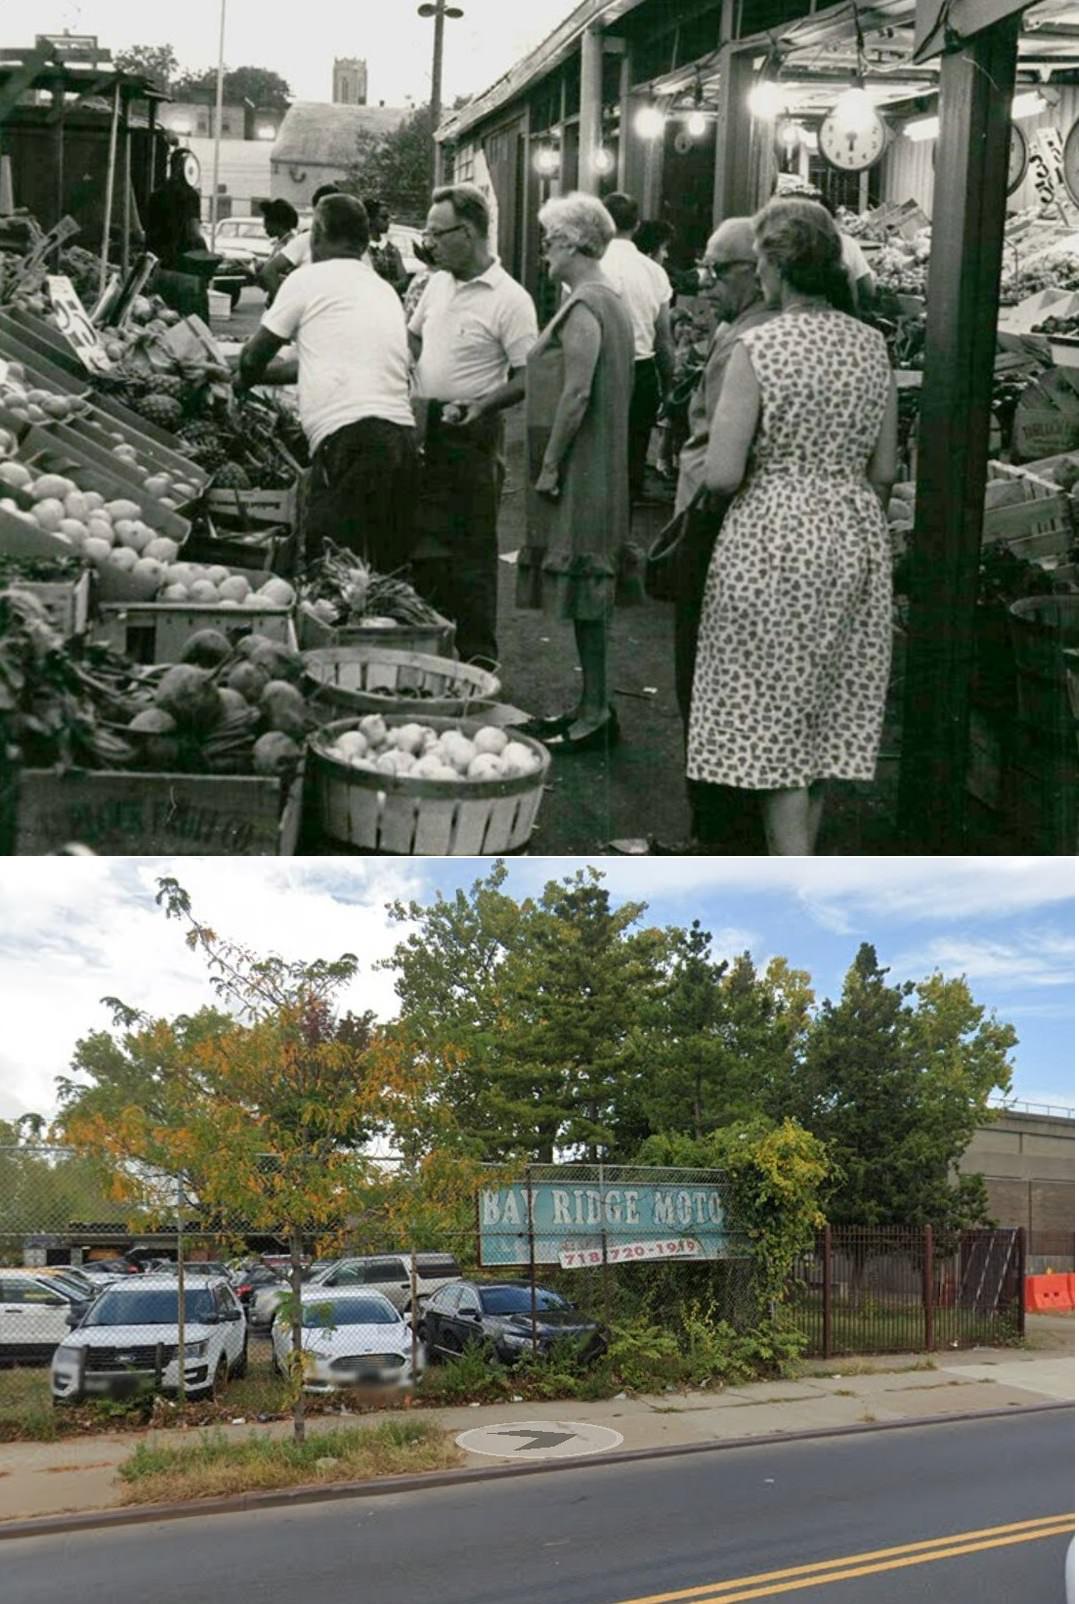 Port Richmond Farmers Market Was Located At 1851 Richmond Terrace, 1965.